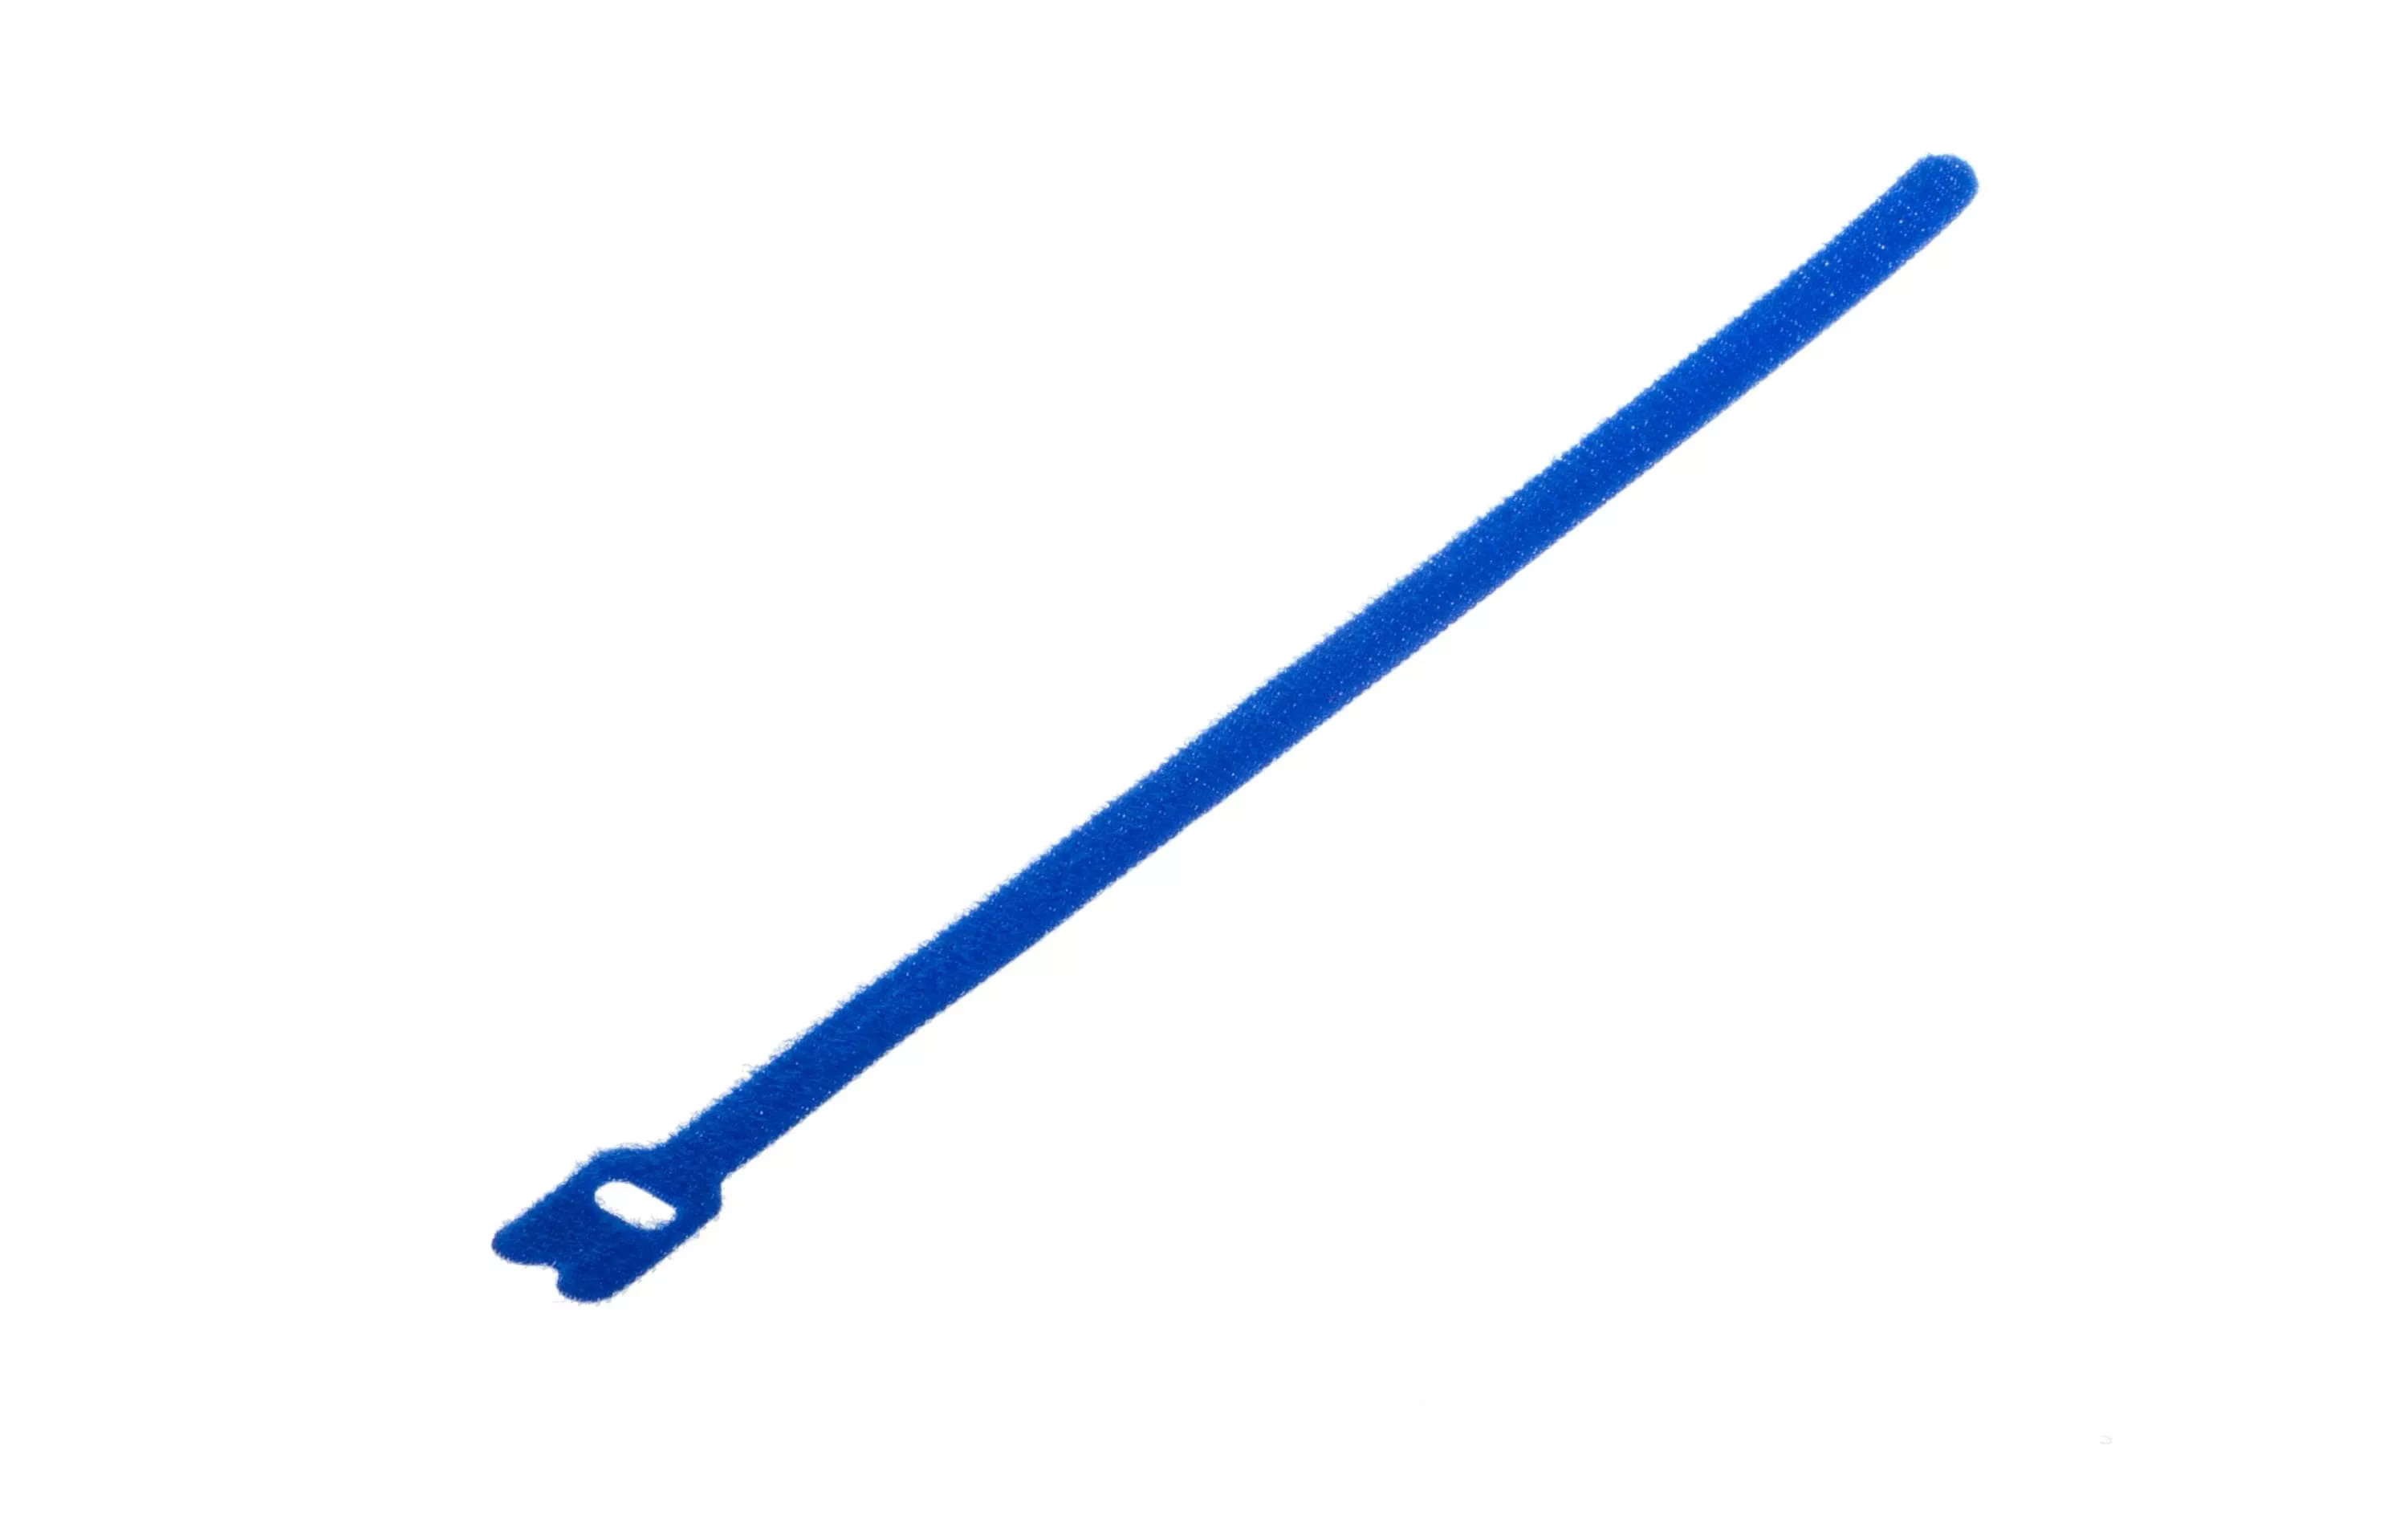 Klettkabelbinder E7-2 Strap 7 x 200 mm Blau, 10 Stück